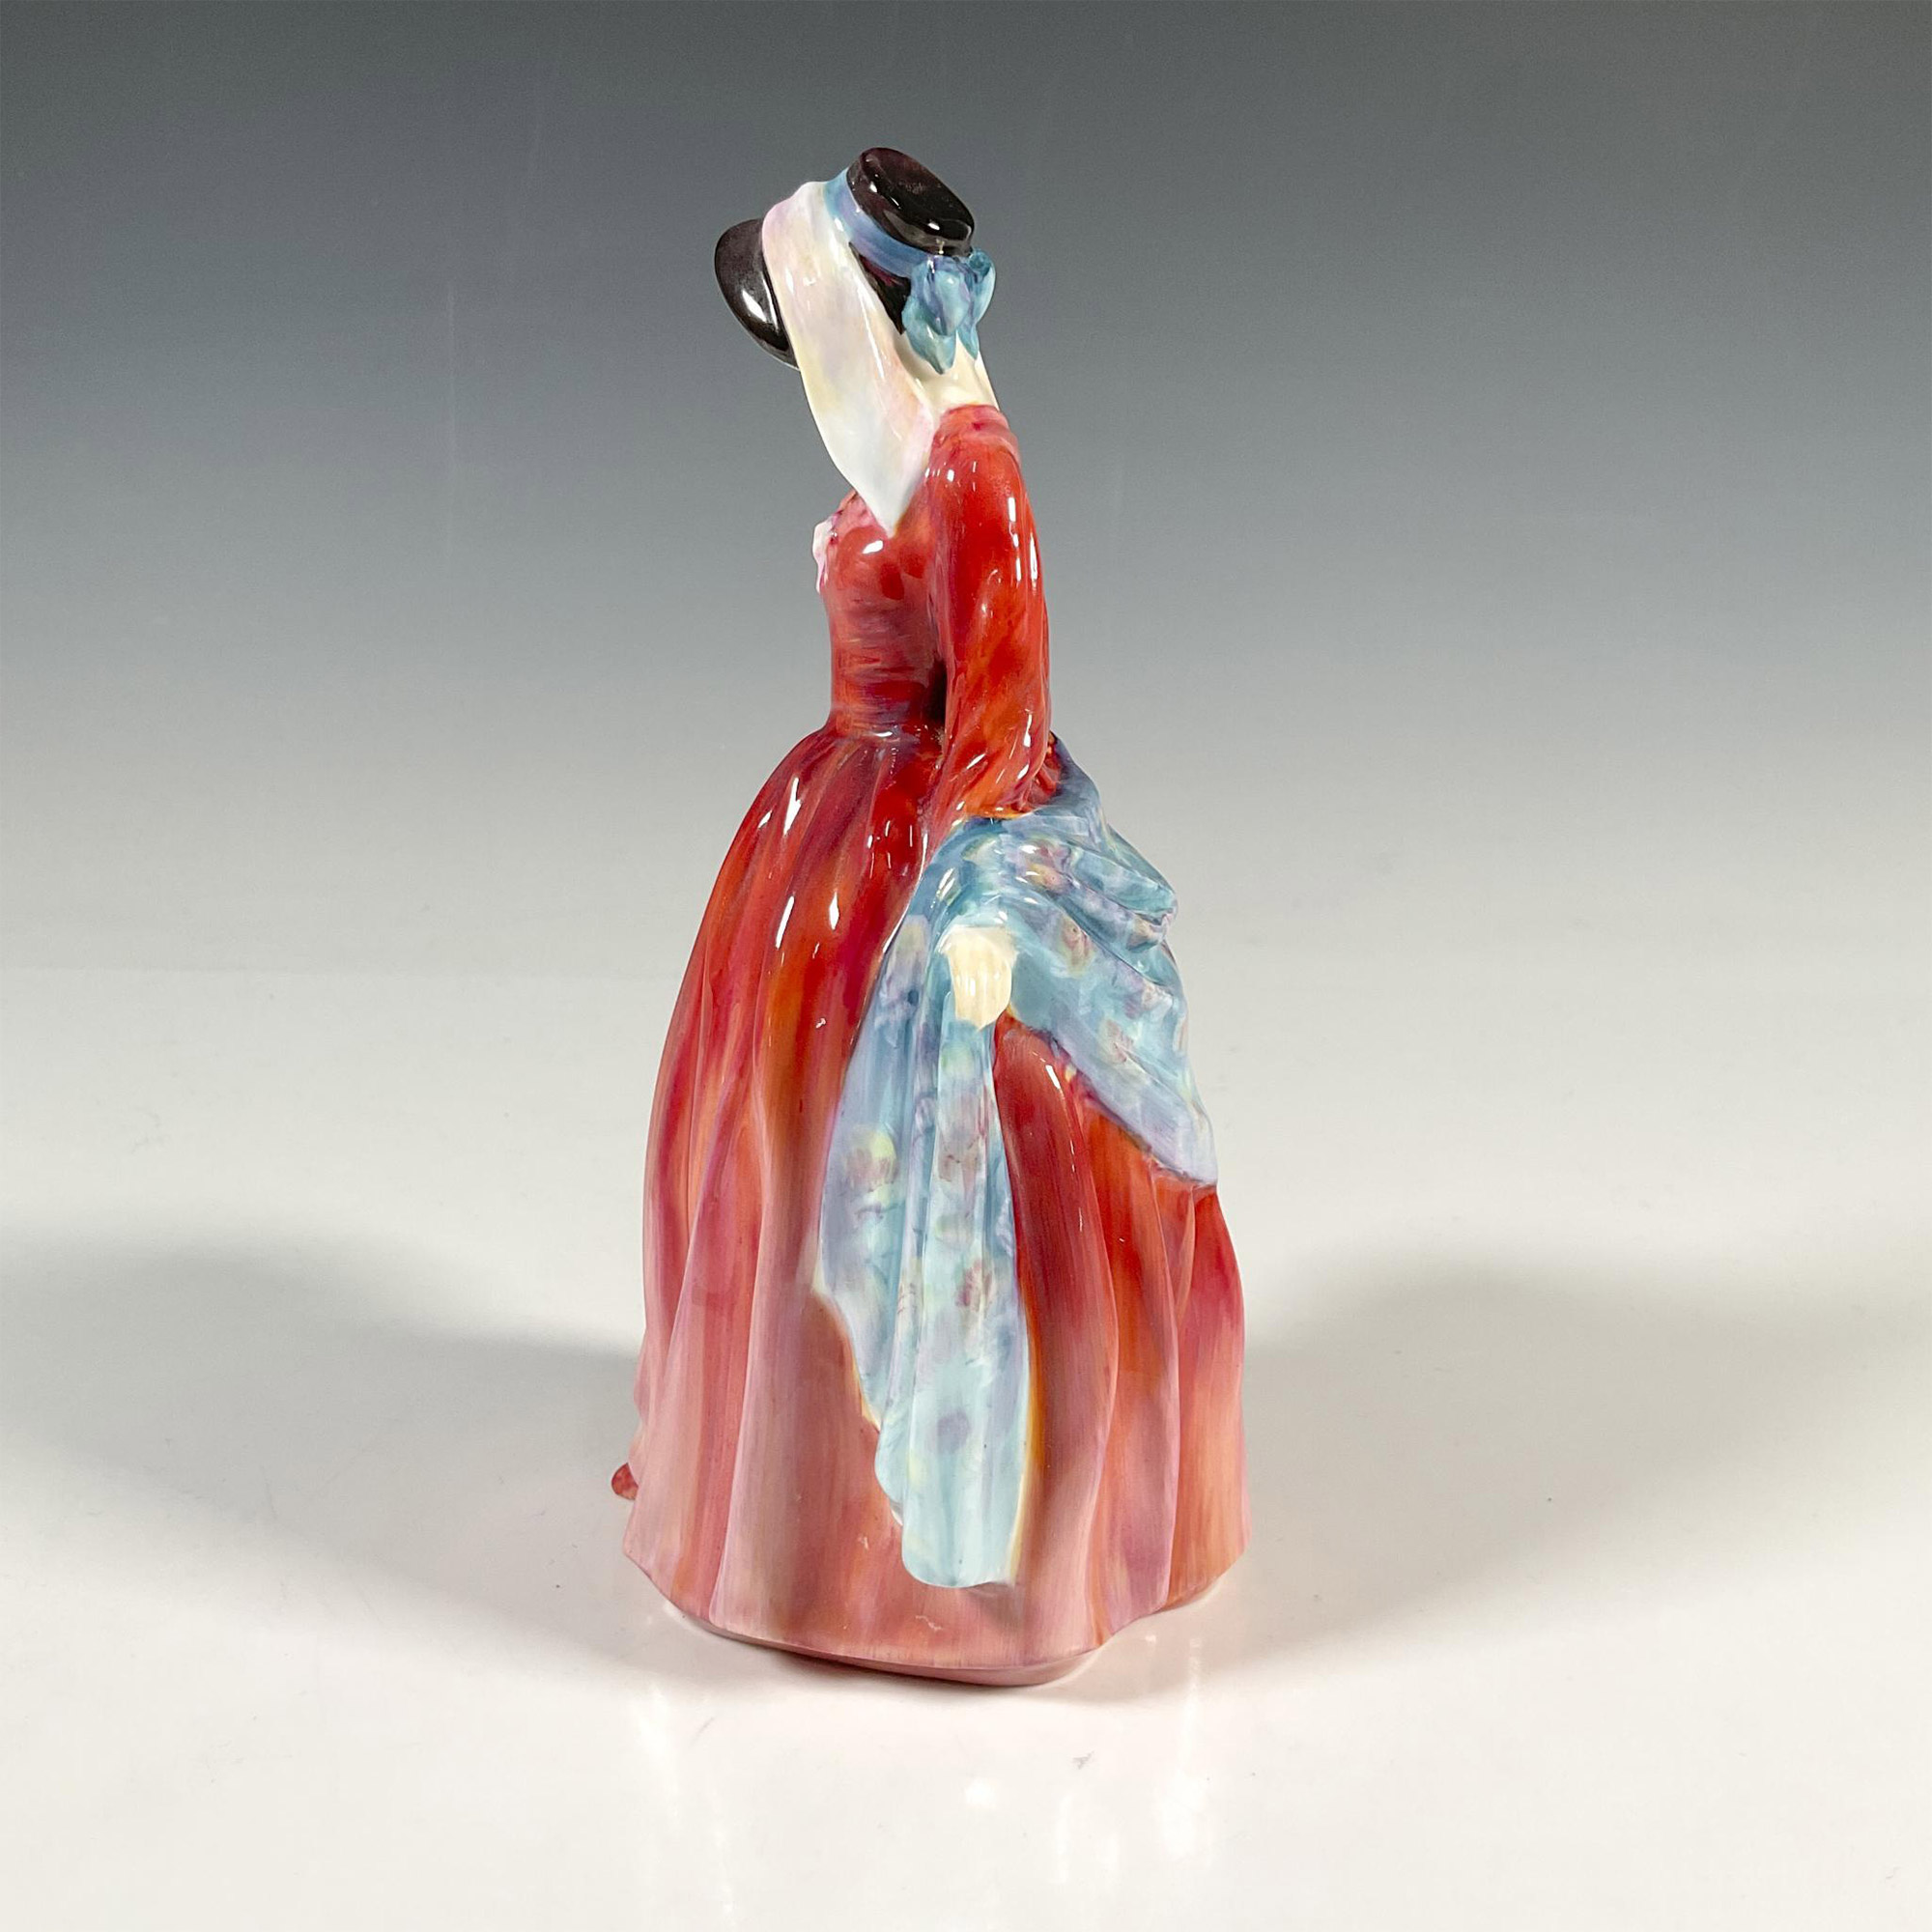 Rosemary HN2091 - Royal Doulton Figurine - Image 2 of 5